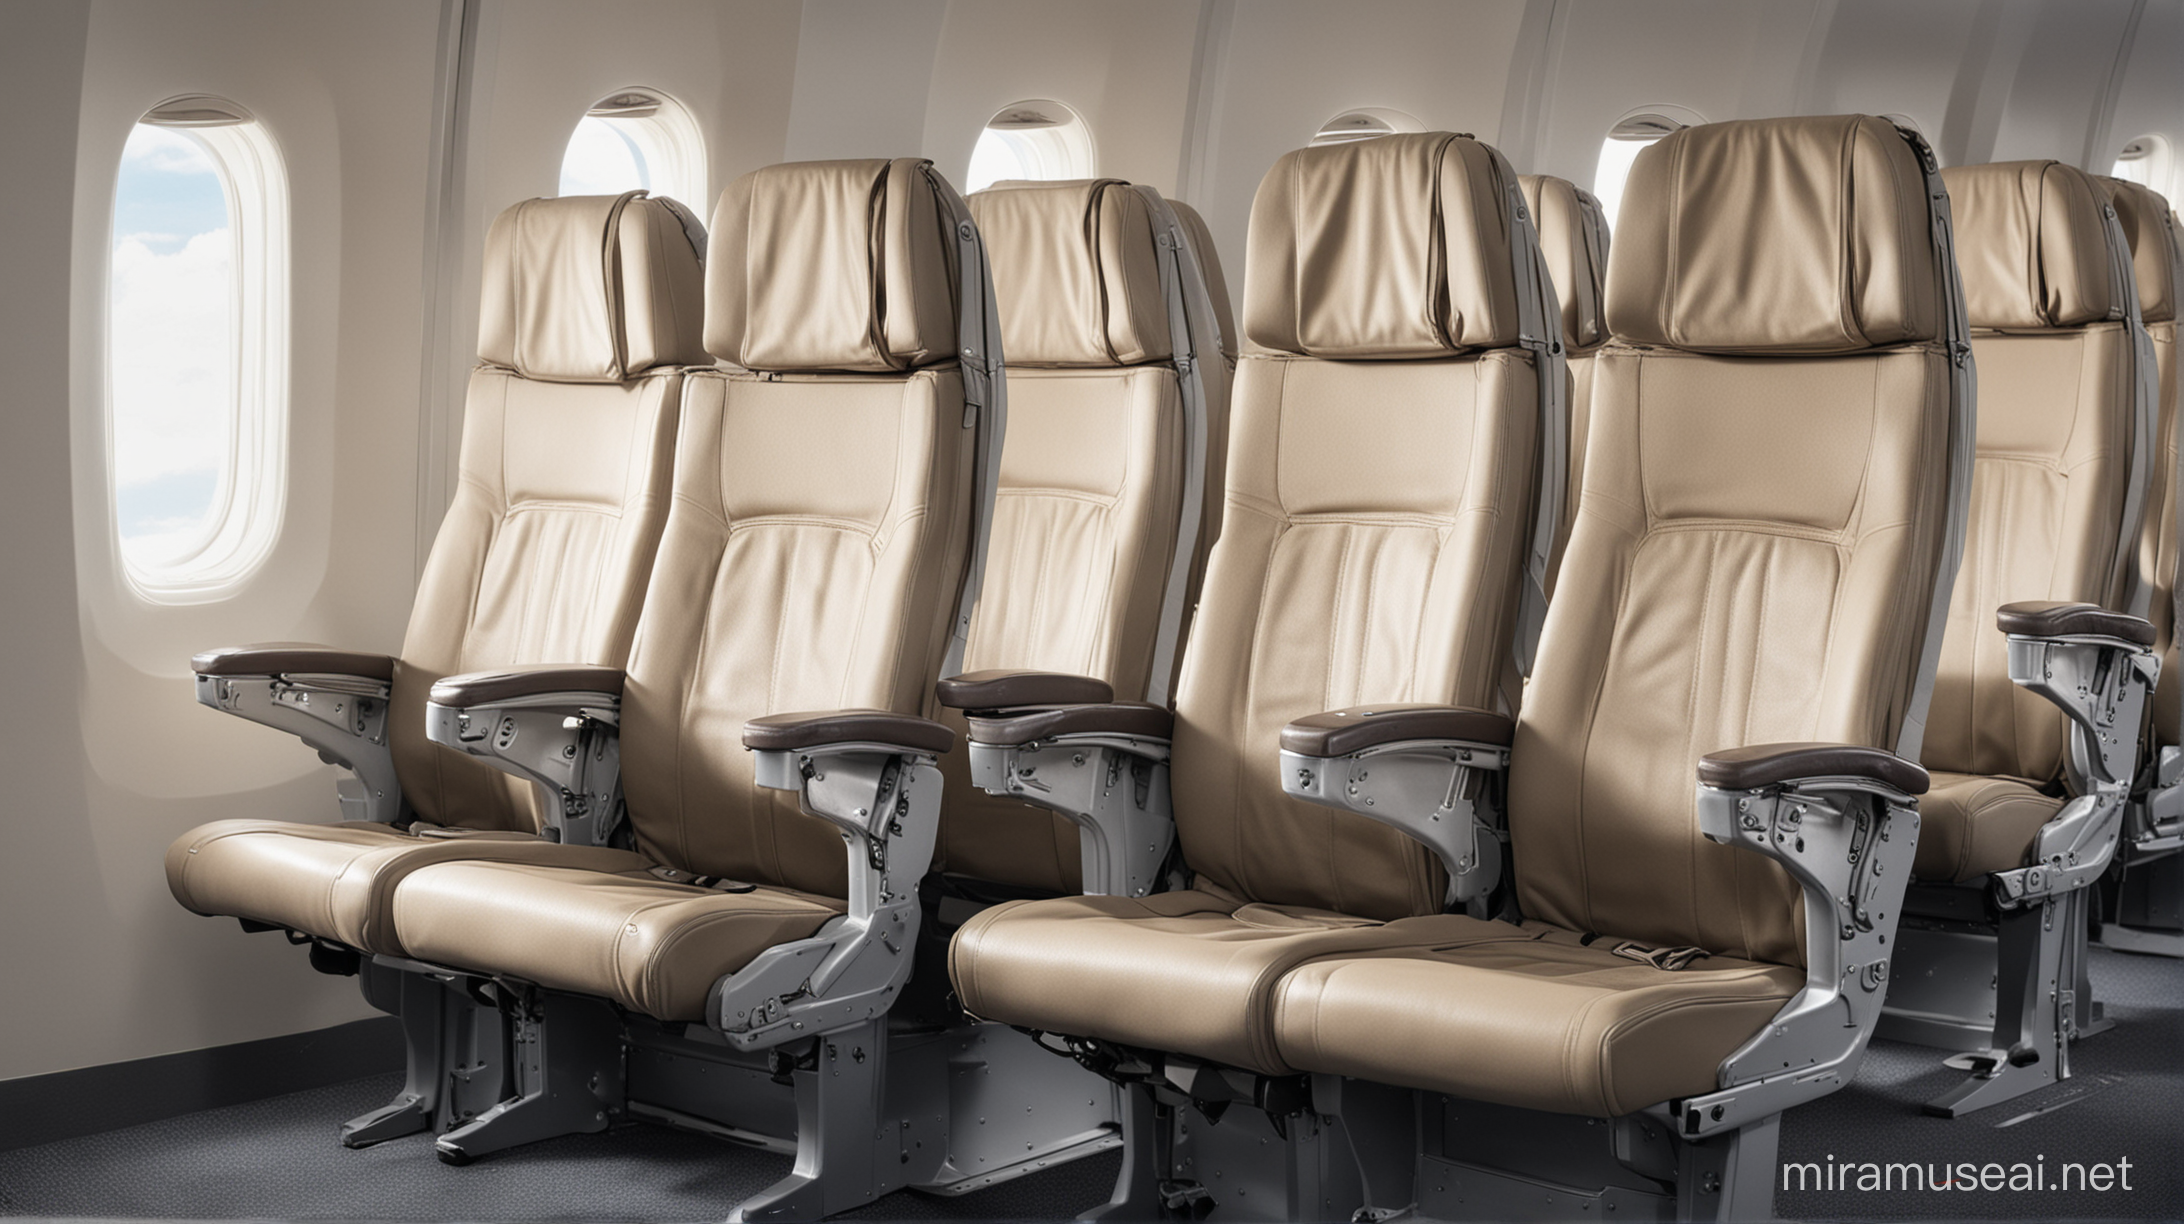 aircraft seats set of three in row